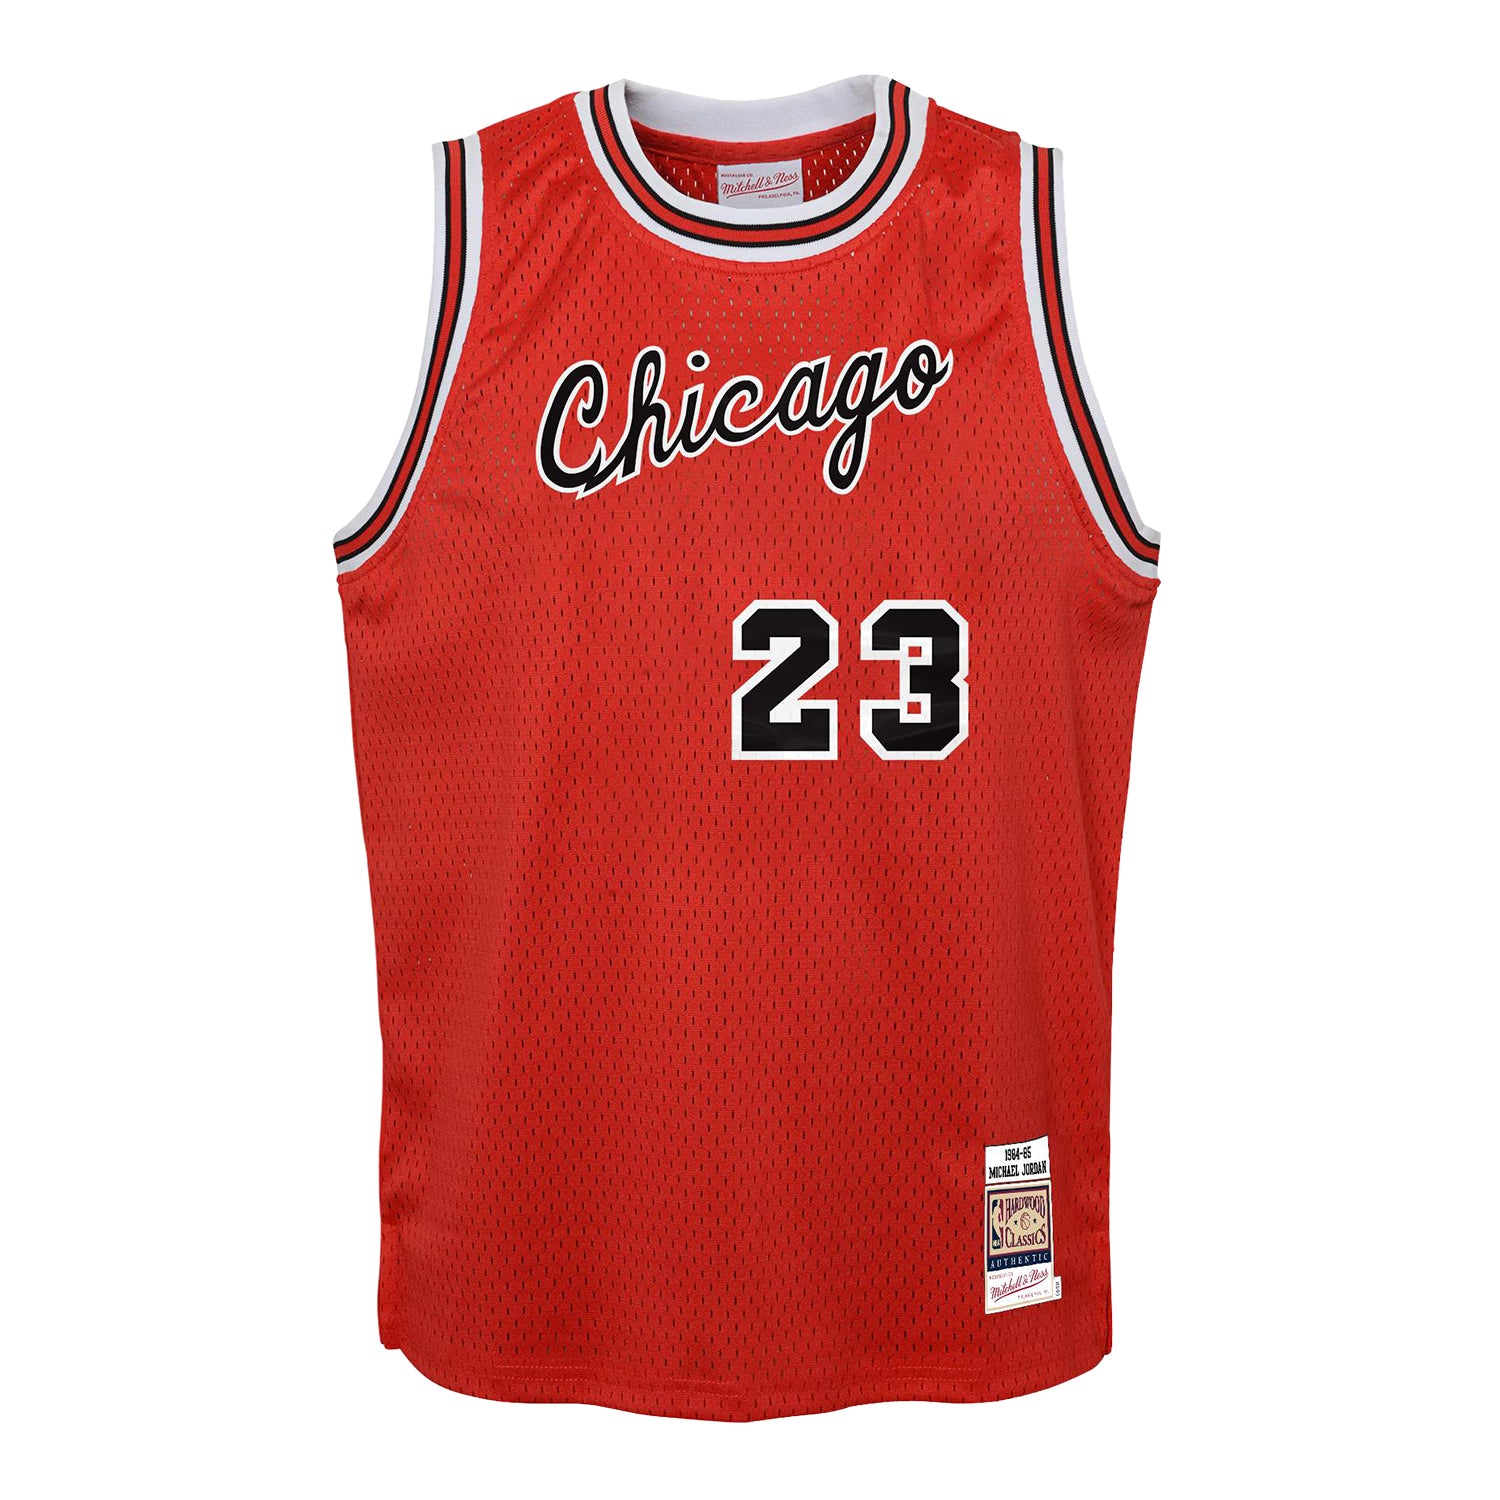 Chicago Bulls Authentic Mitchell & Ness Michael Jordan 1996 All-Star Jersey